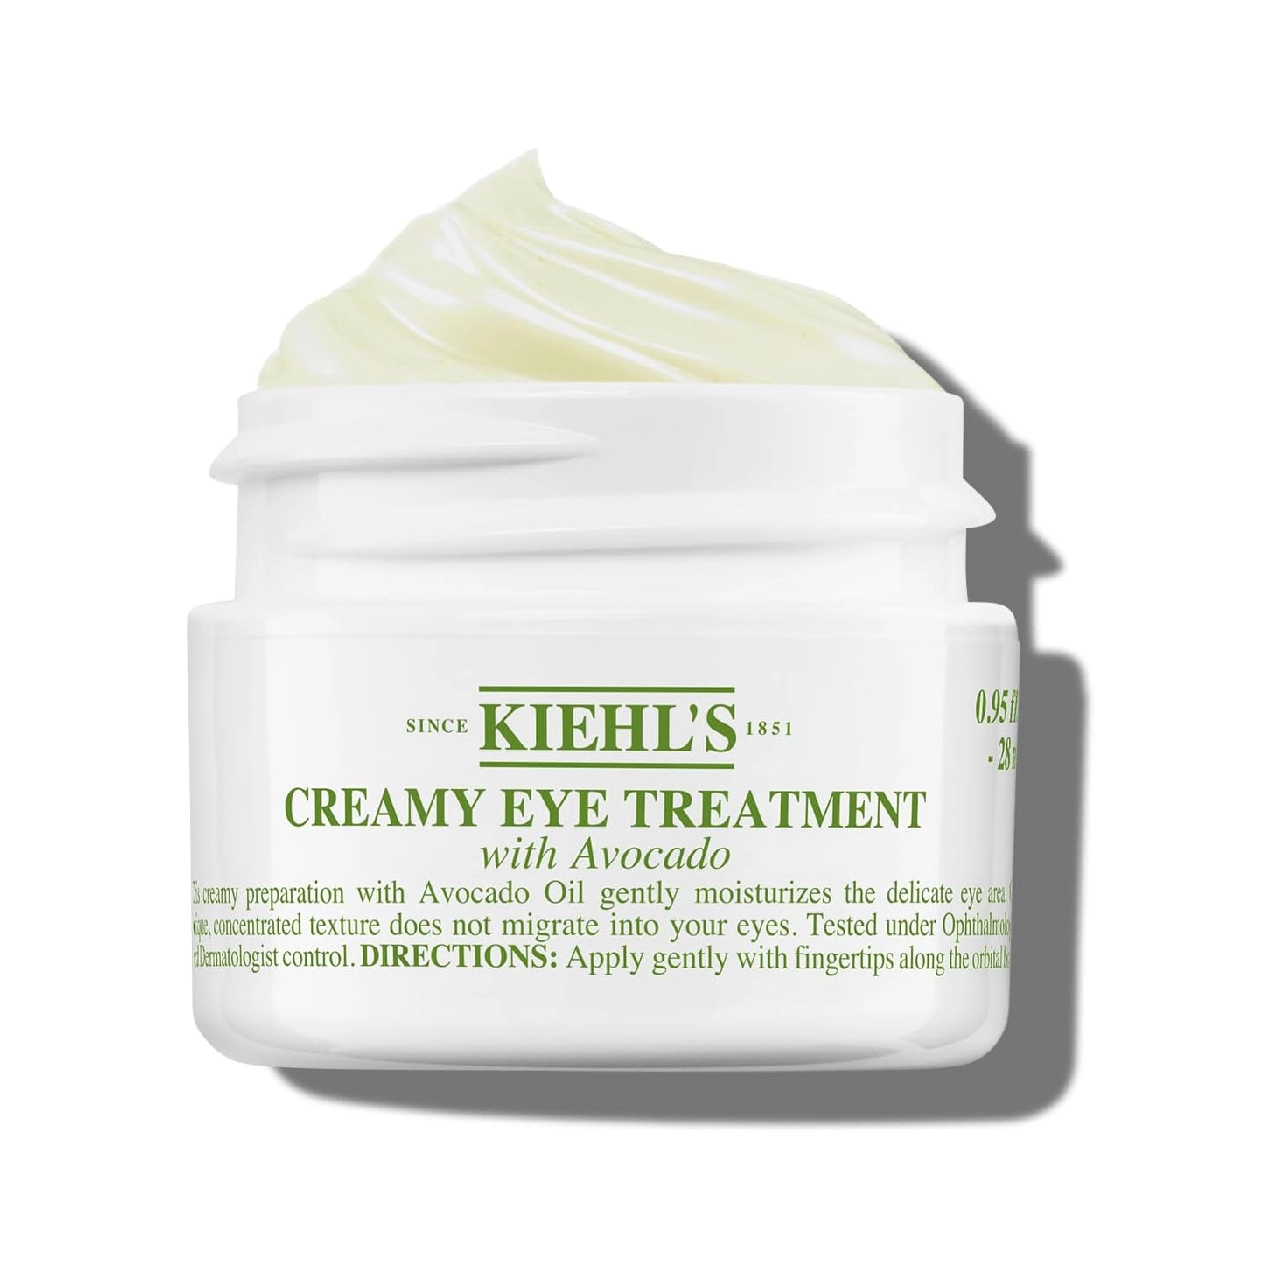 Kiehl's Creamy Eye Treatment with Avocado against a white background